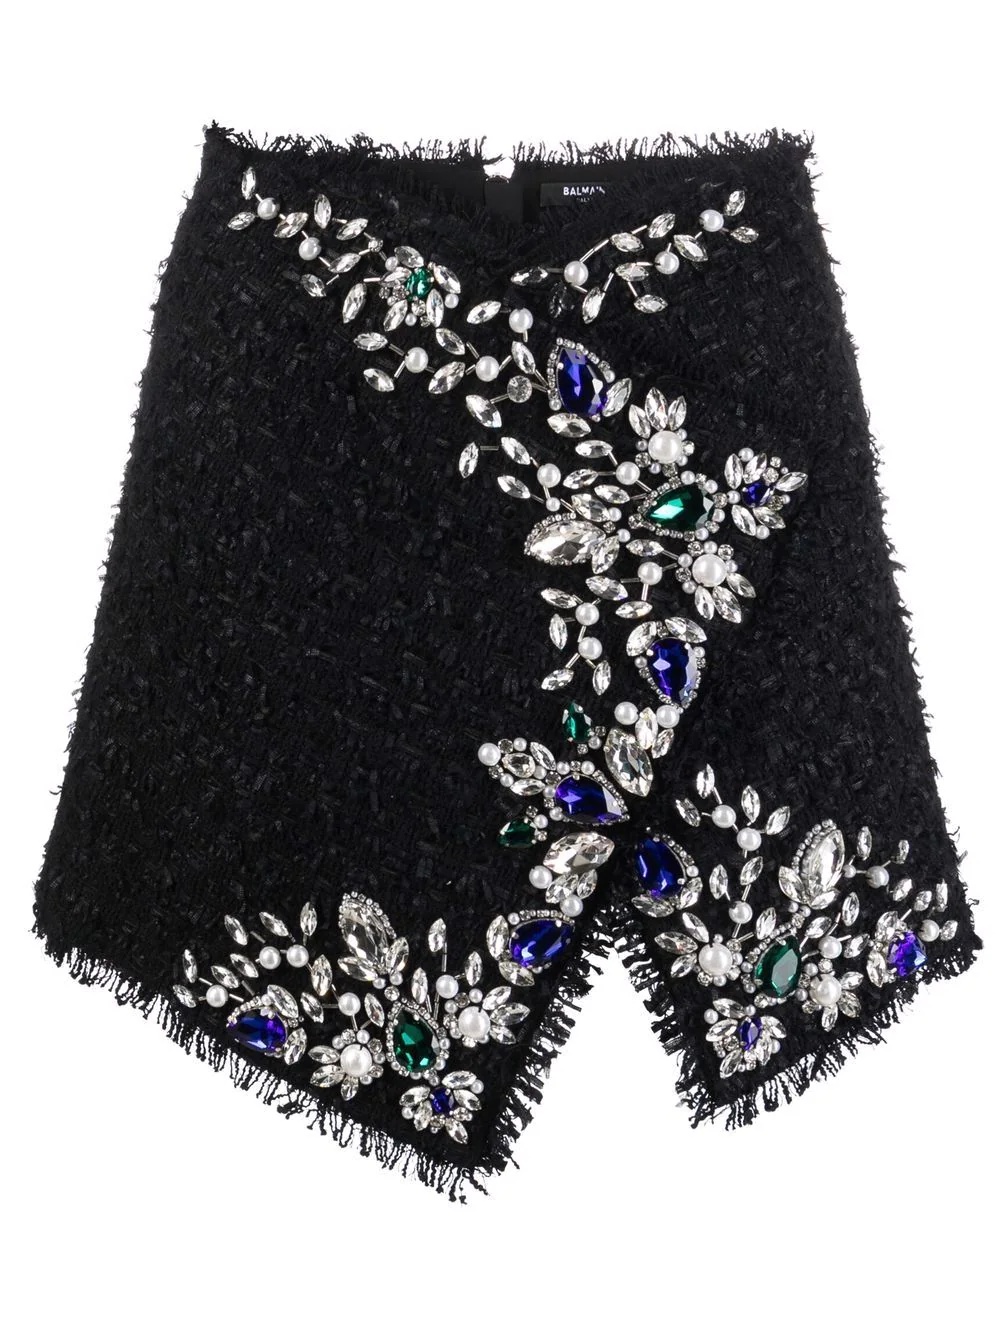 jewel-embellished wrap skirt - 1